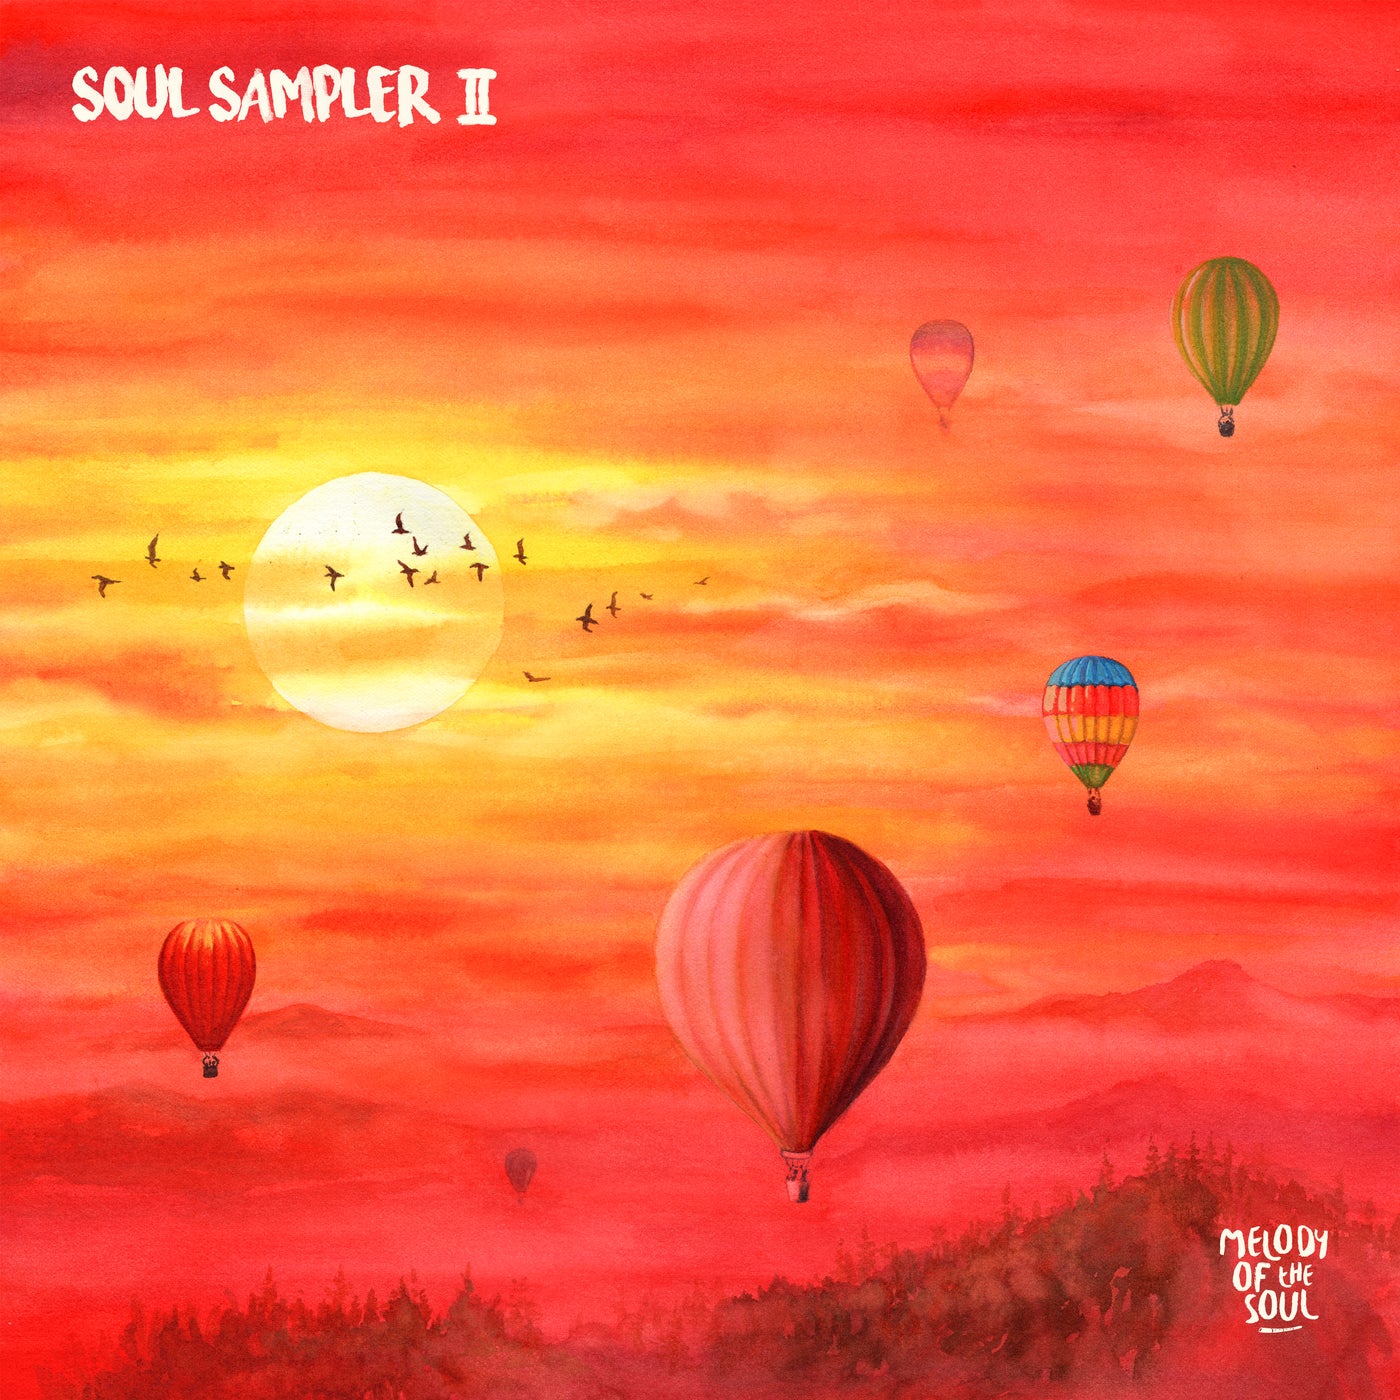 image cover: VA - Soul Sampler II on Melody Of the Soul